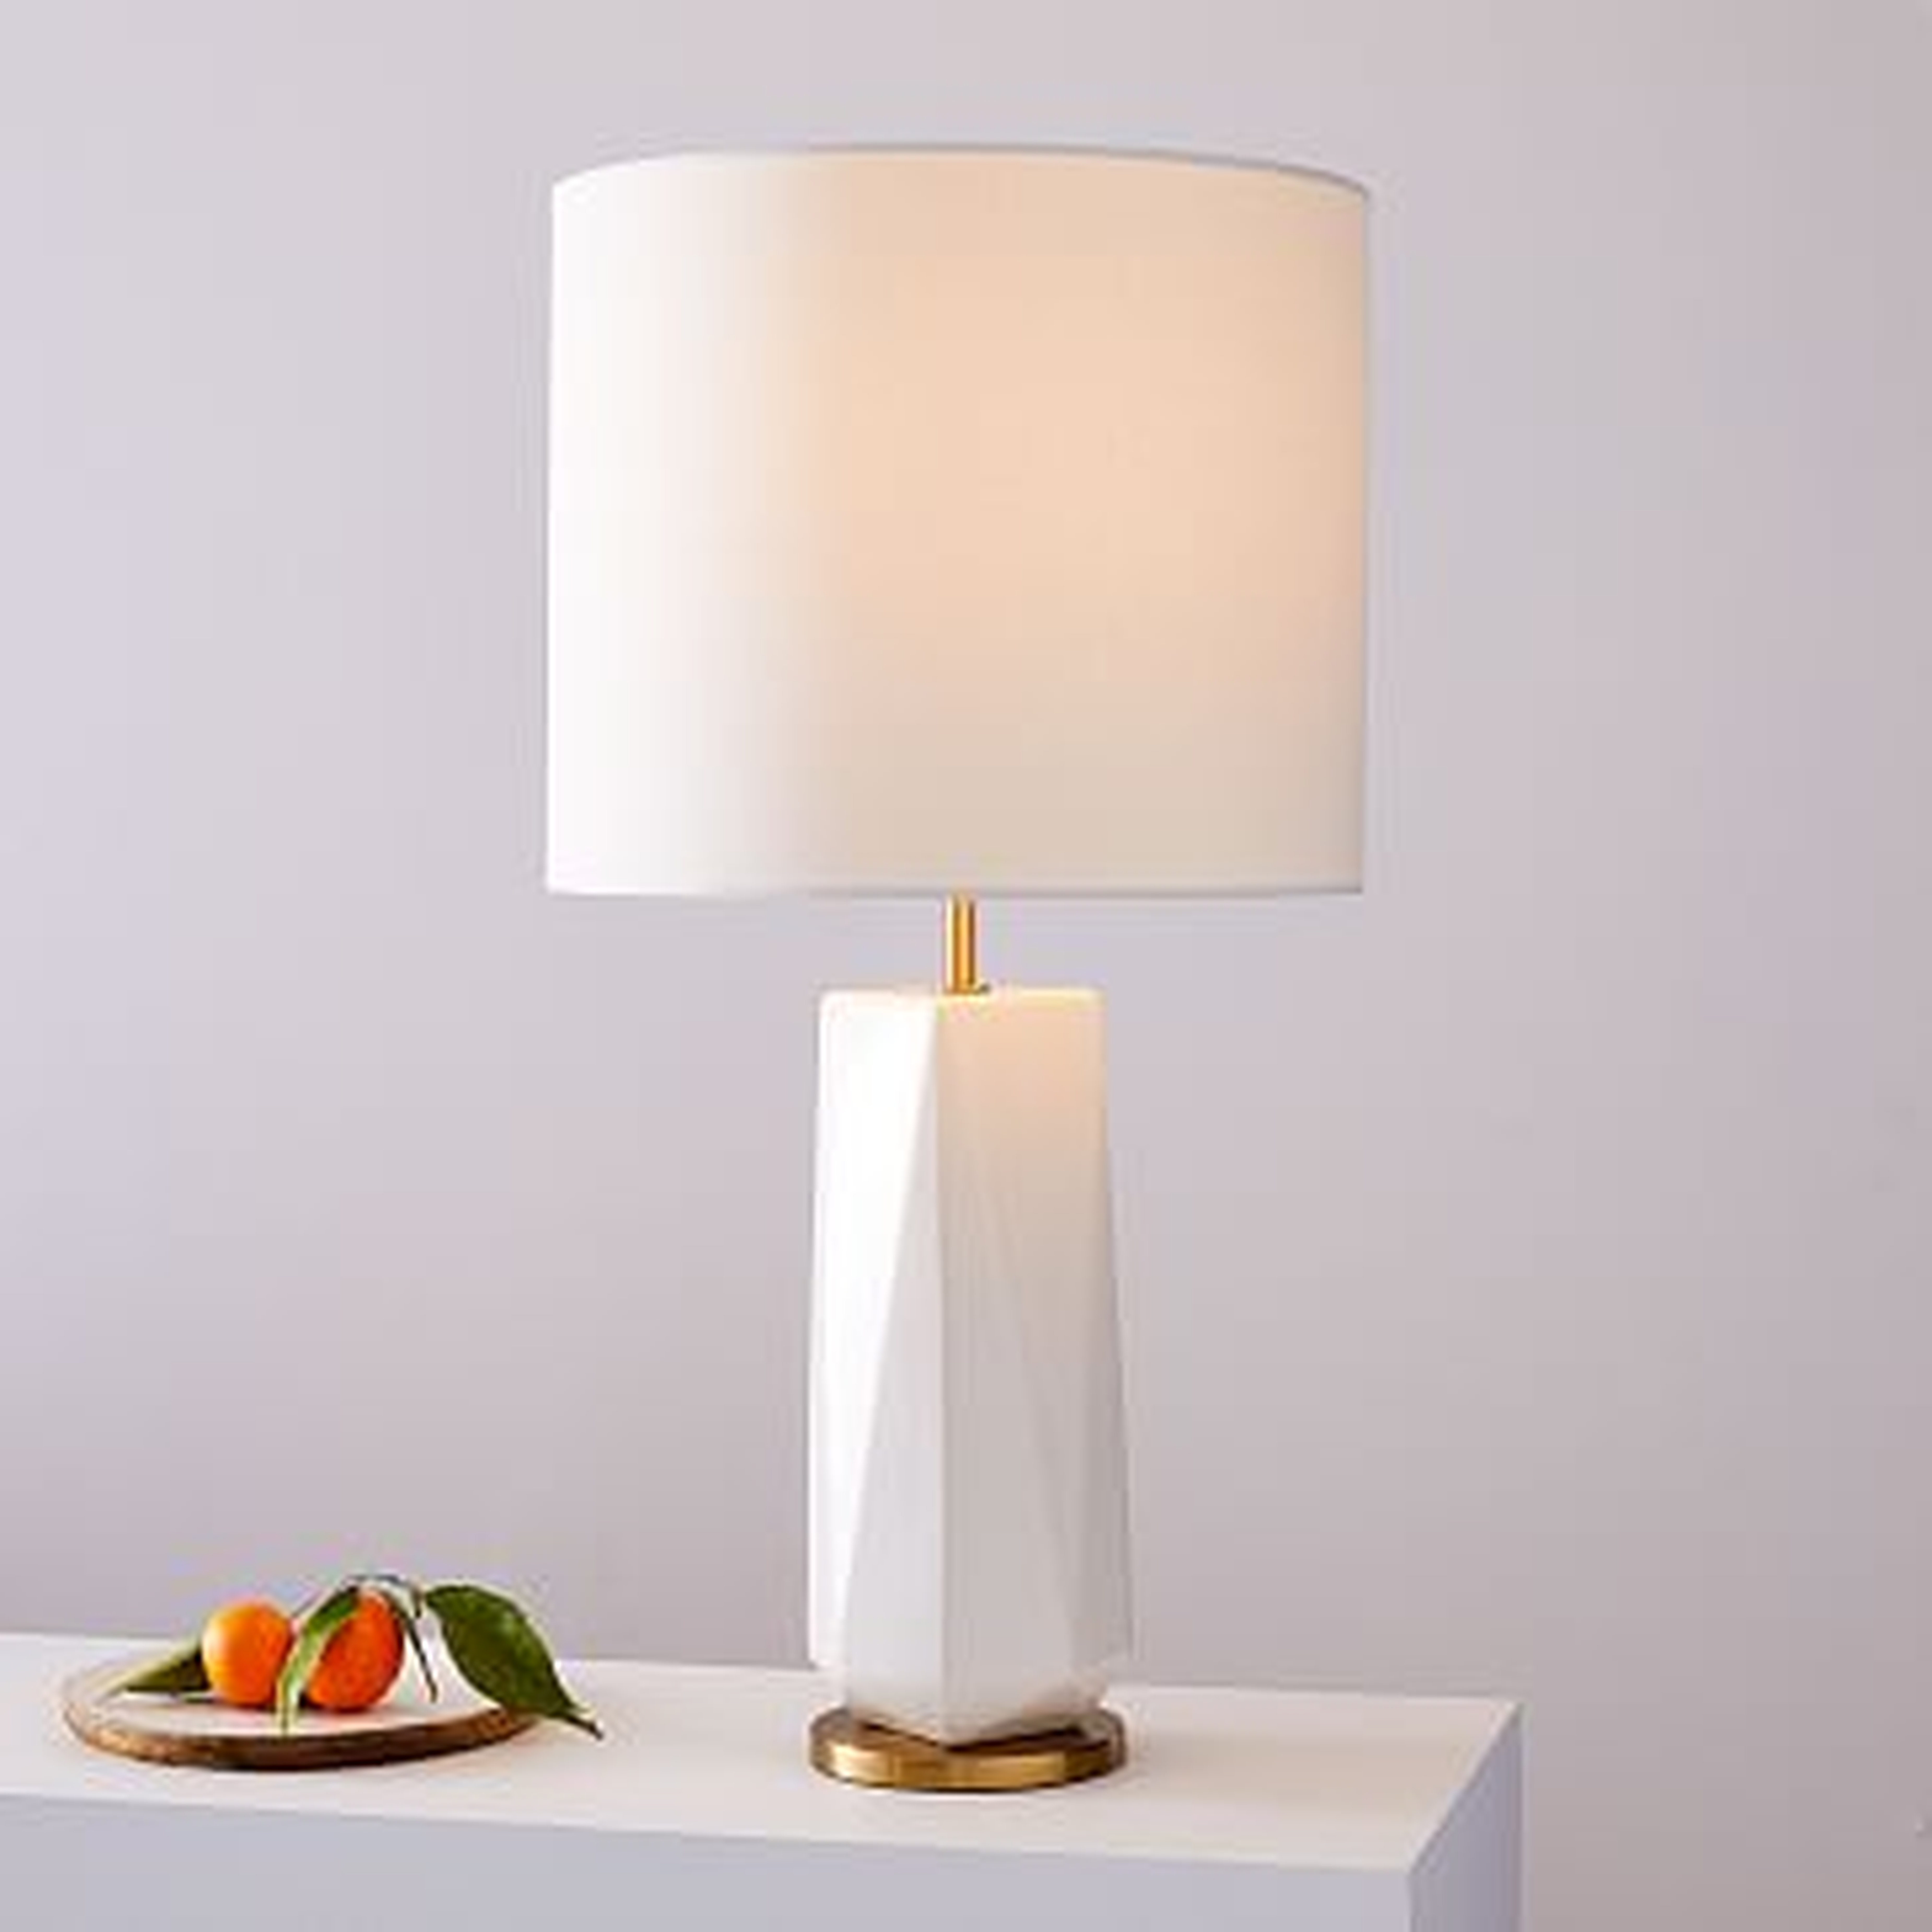 Faceted Porcelain Table Lamp, Large, White, Set of 2 - West Elm